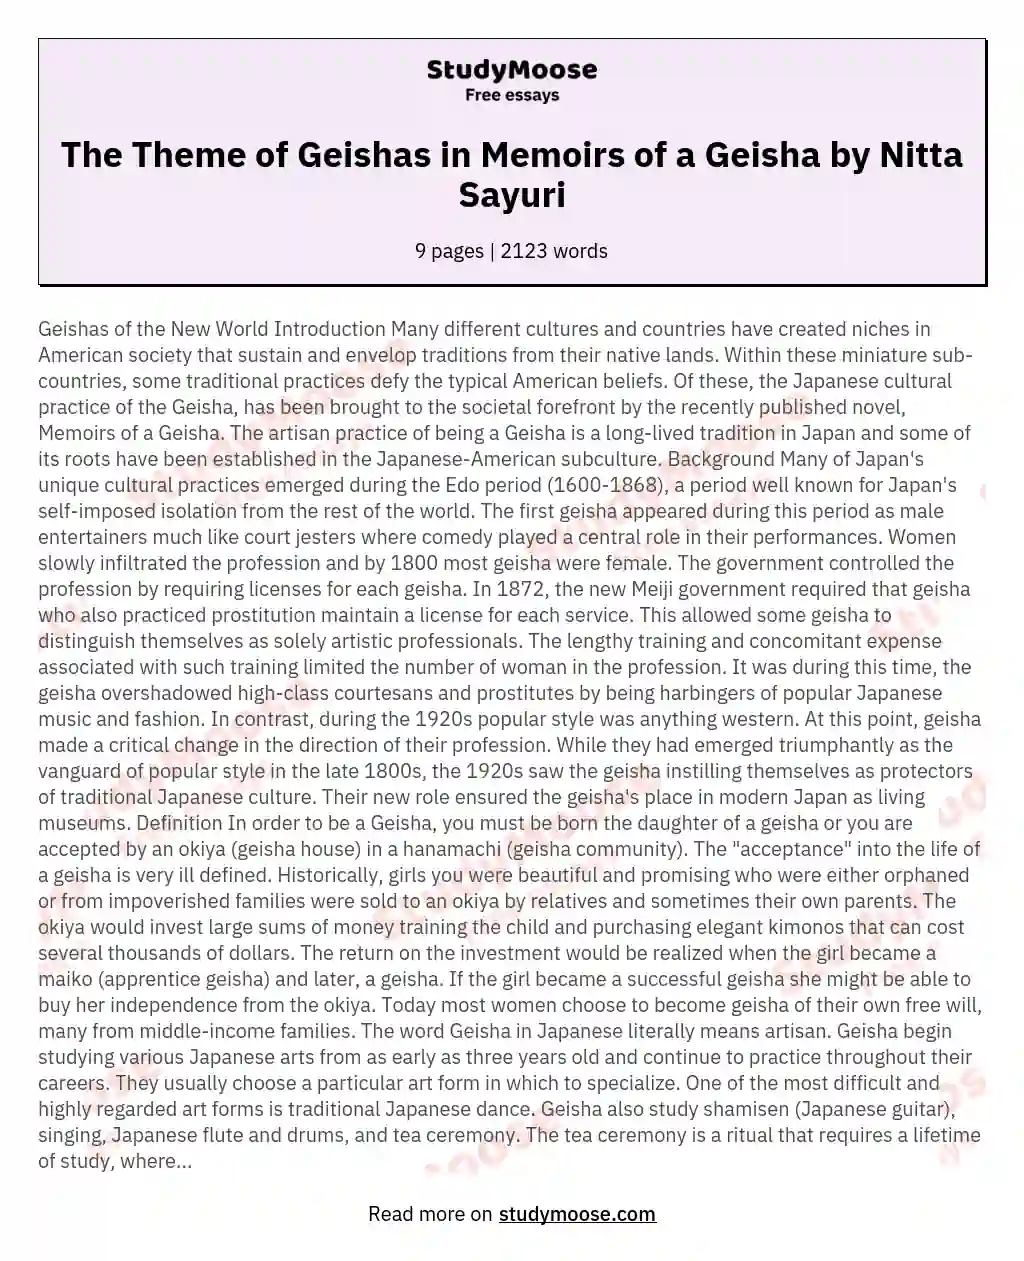 The Theme of Geishas in Memoirs of a Geisha by Nitta Sayuri essay